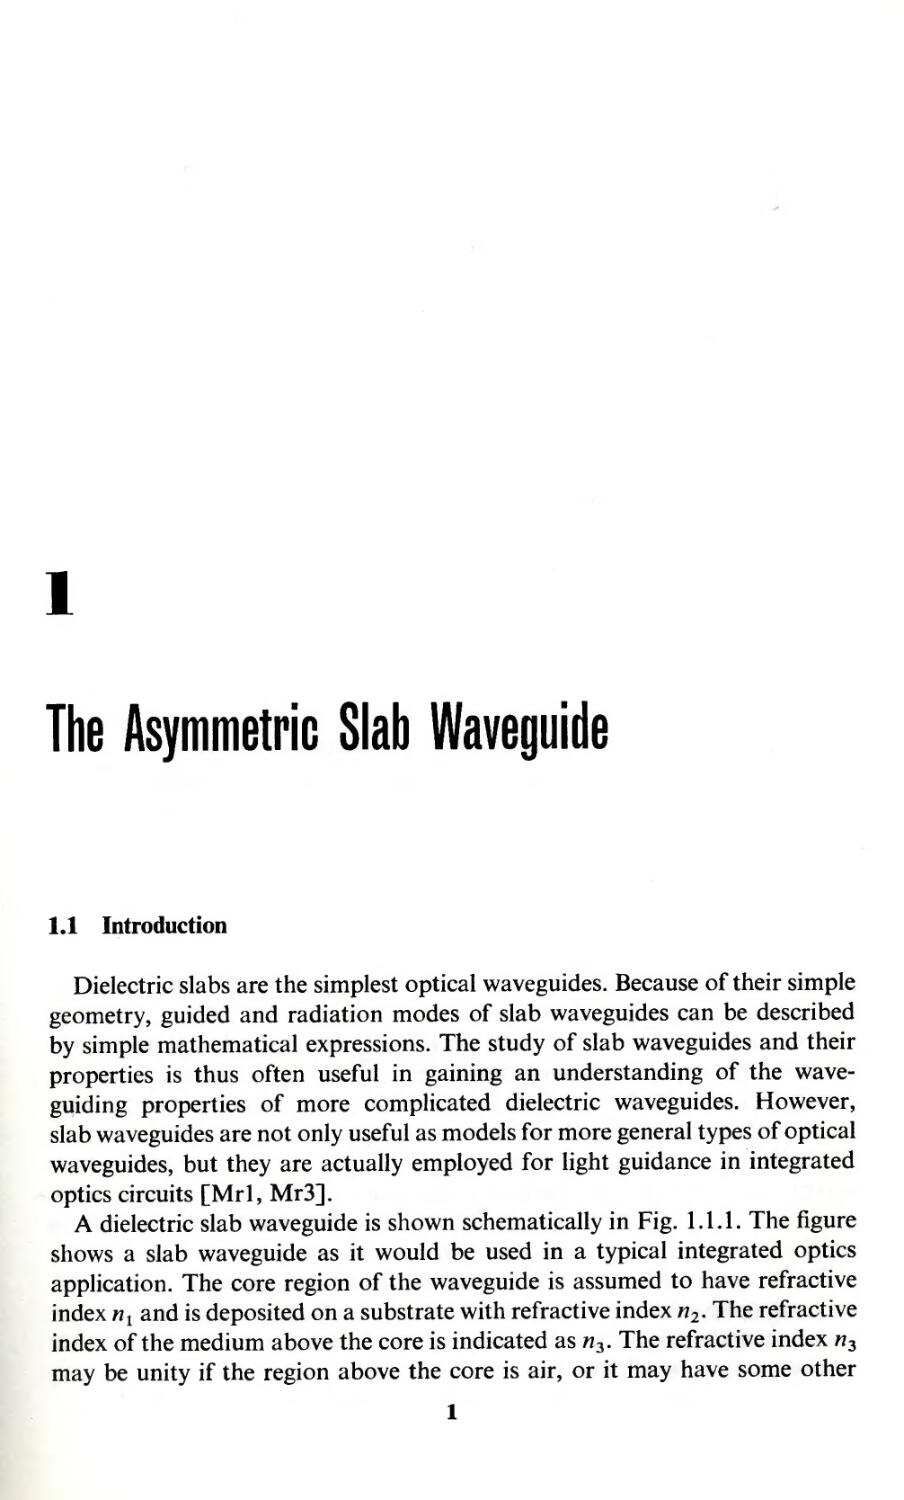 Chapter 1. The Asymmetric Slab Waveguide
Asymmetric slab waveguide, 1
Integrated optics, 1
Slab waveguide, 1
--- asymmetric, 1